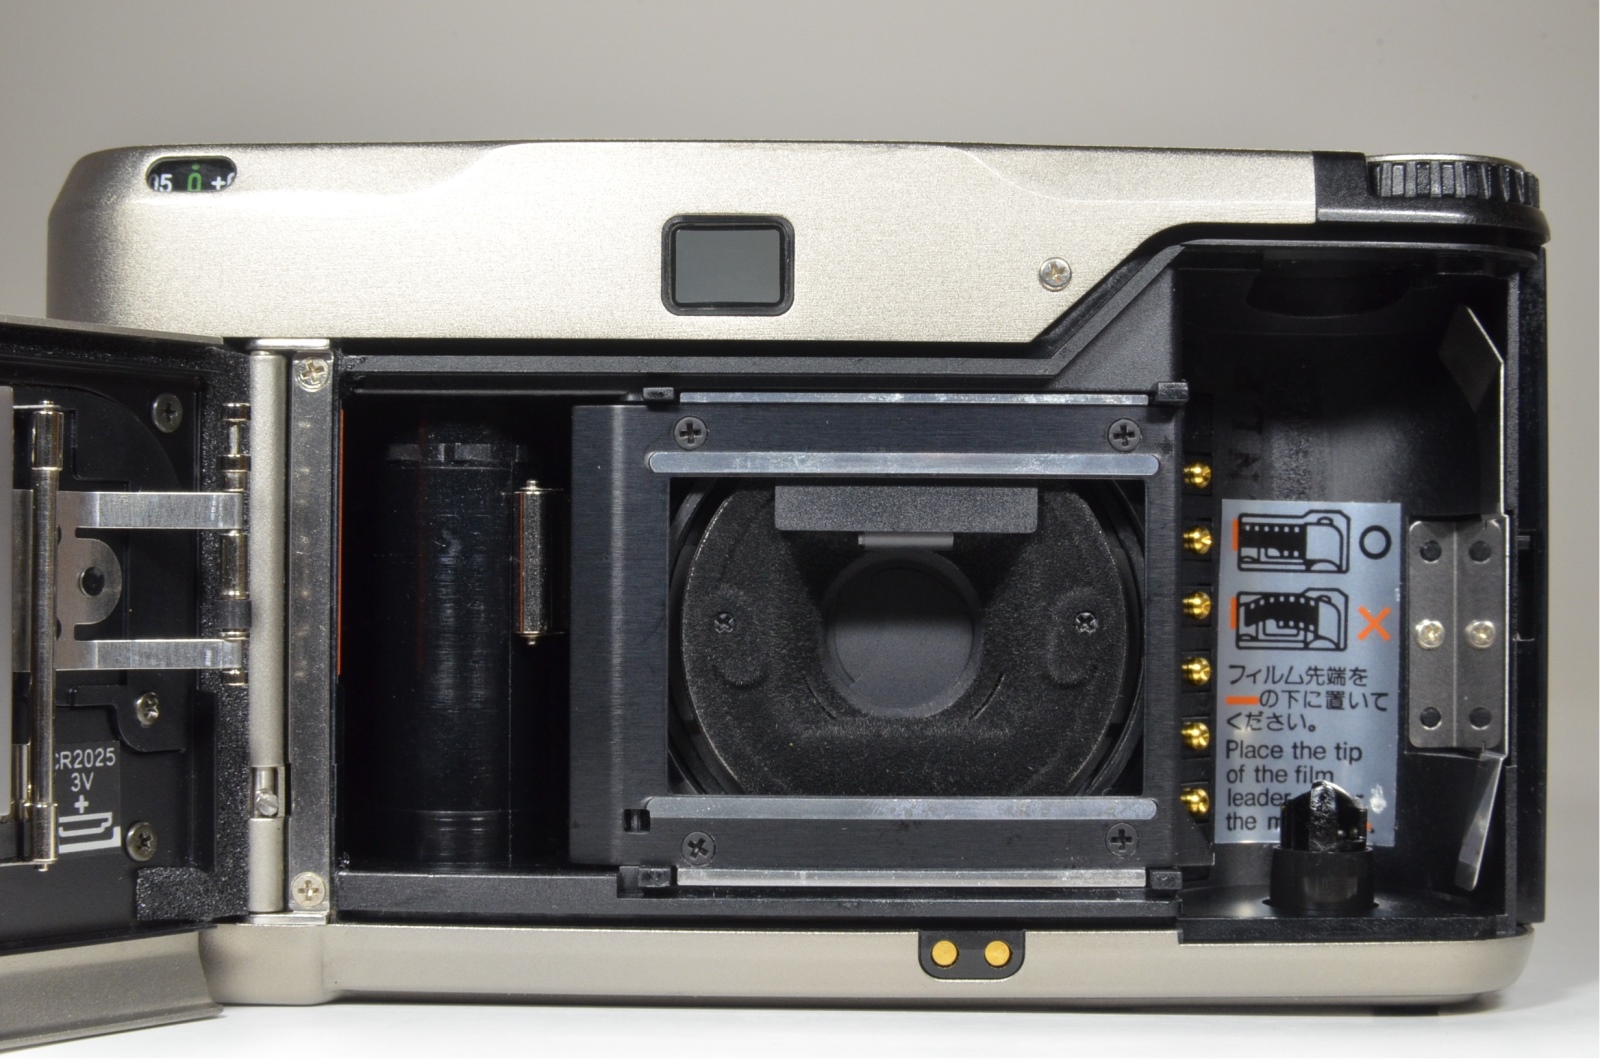 contax t2 data back titanium silver p&s 35mm film camera